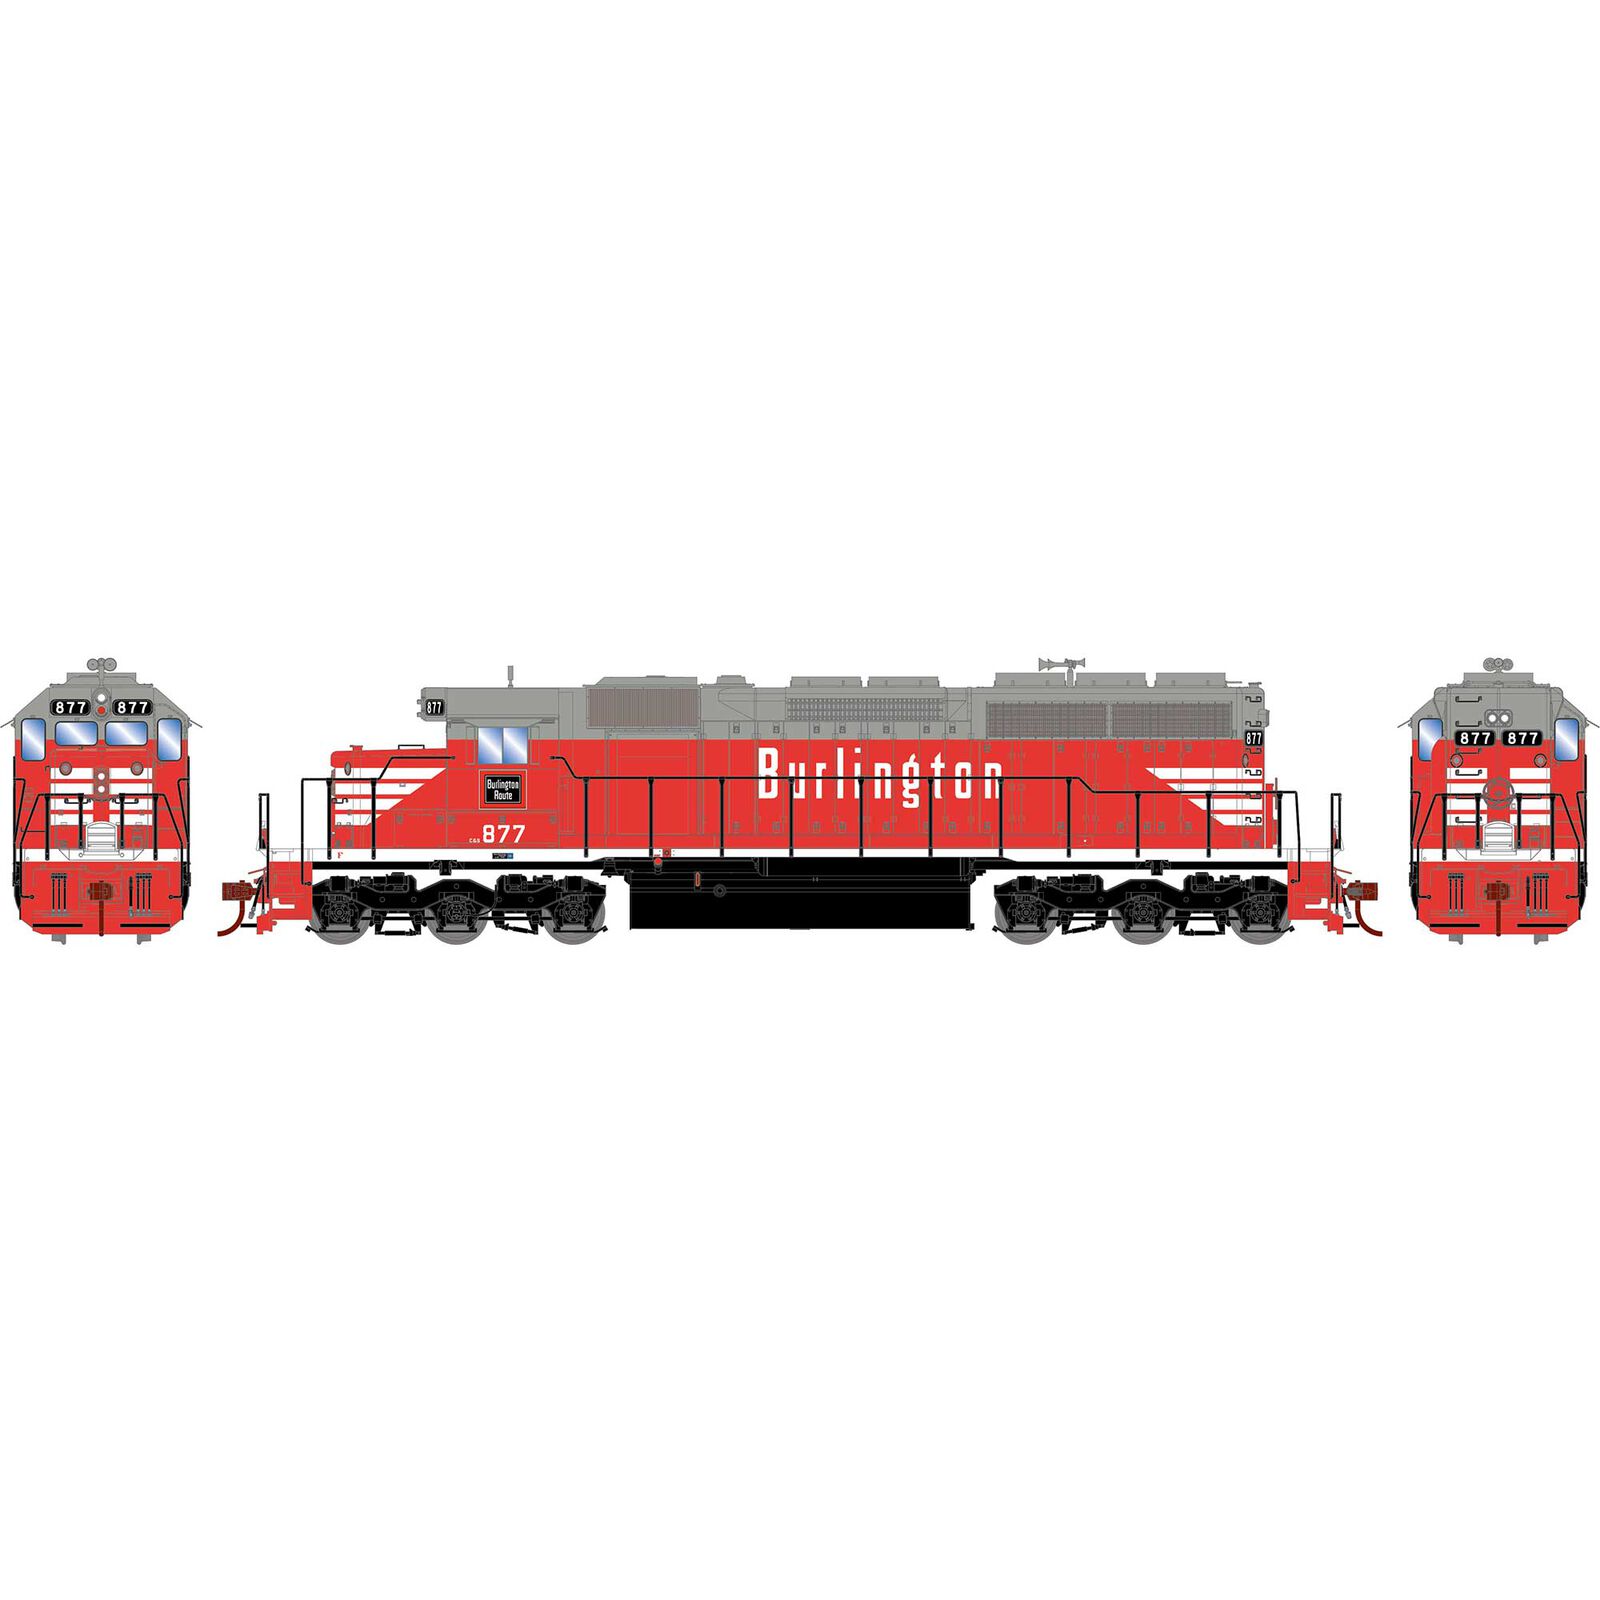 HO SD40 Locomotive with DCC & Sound, Colorado & Southern #877